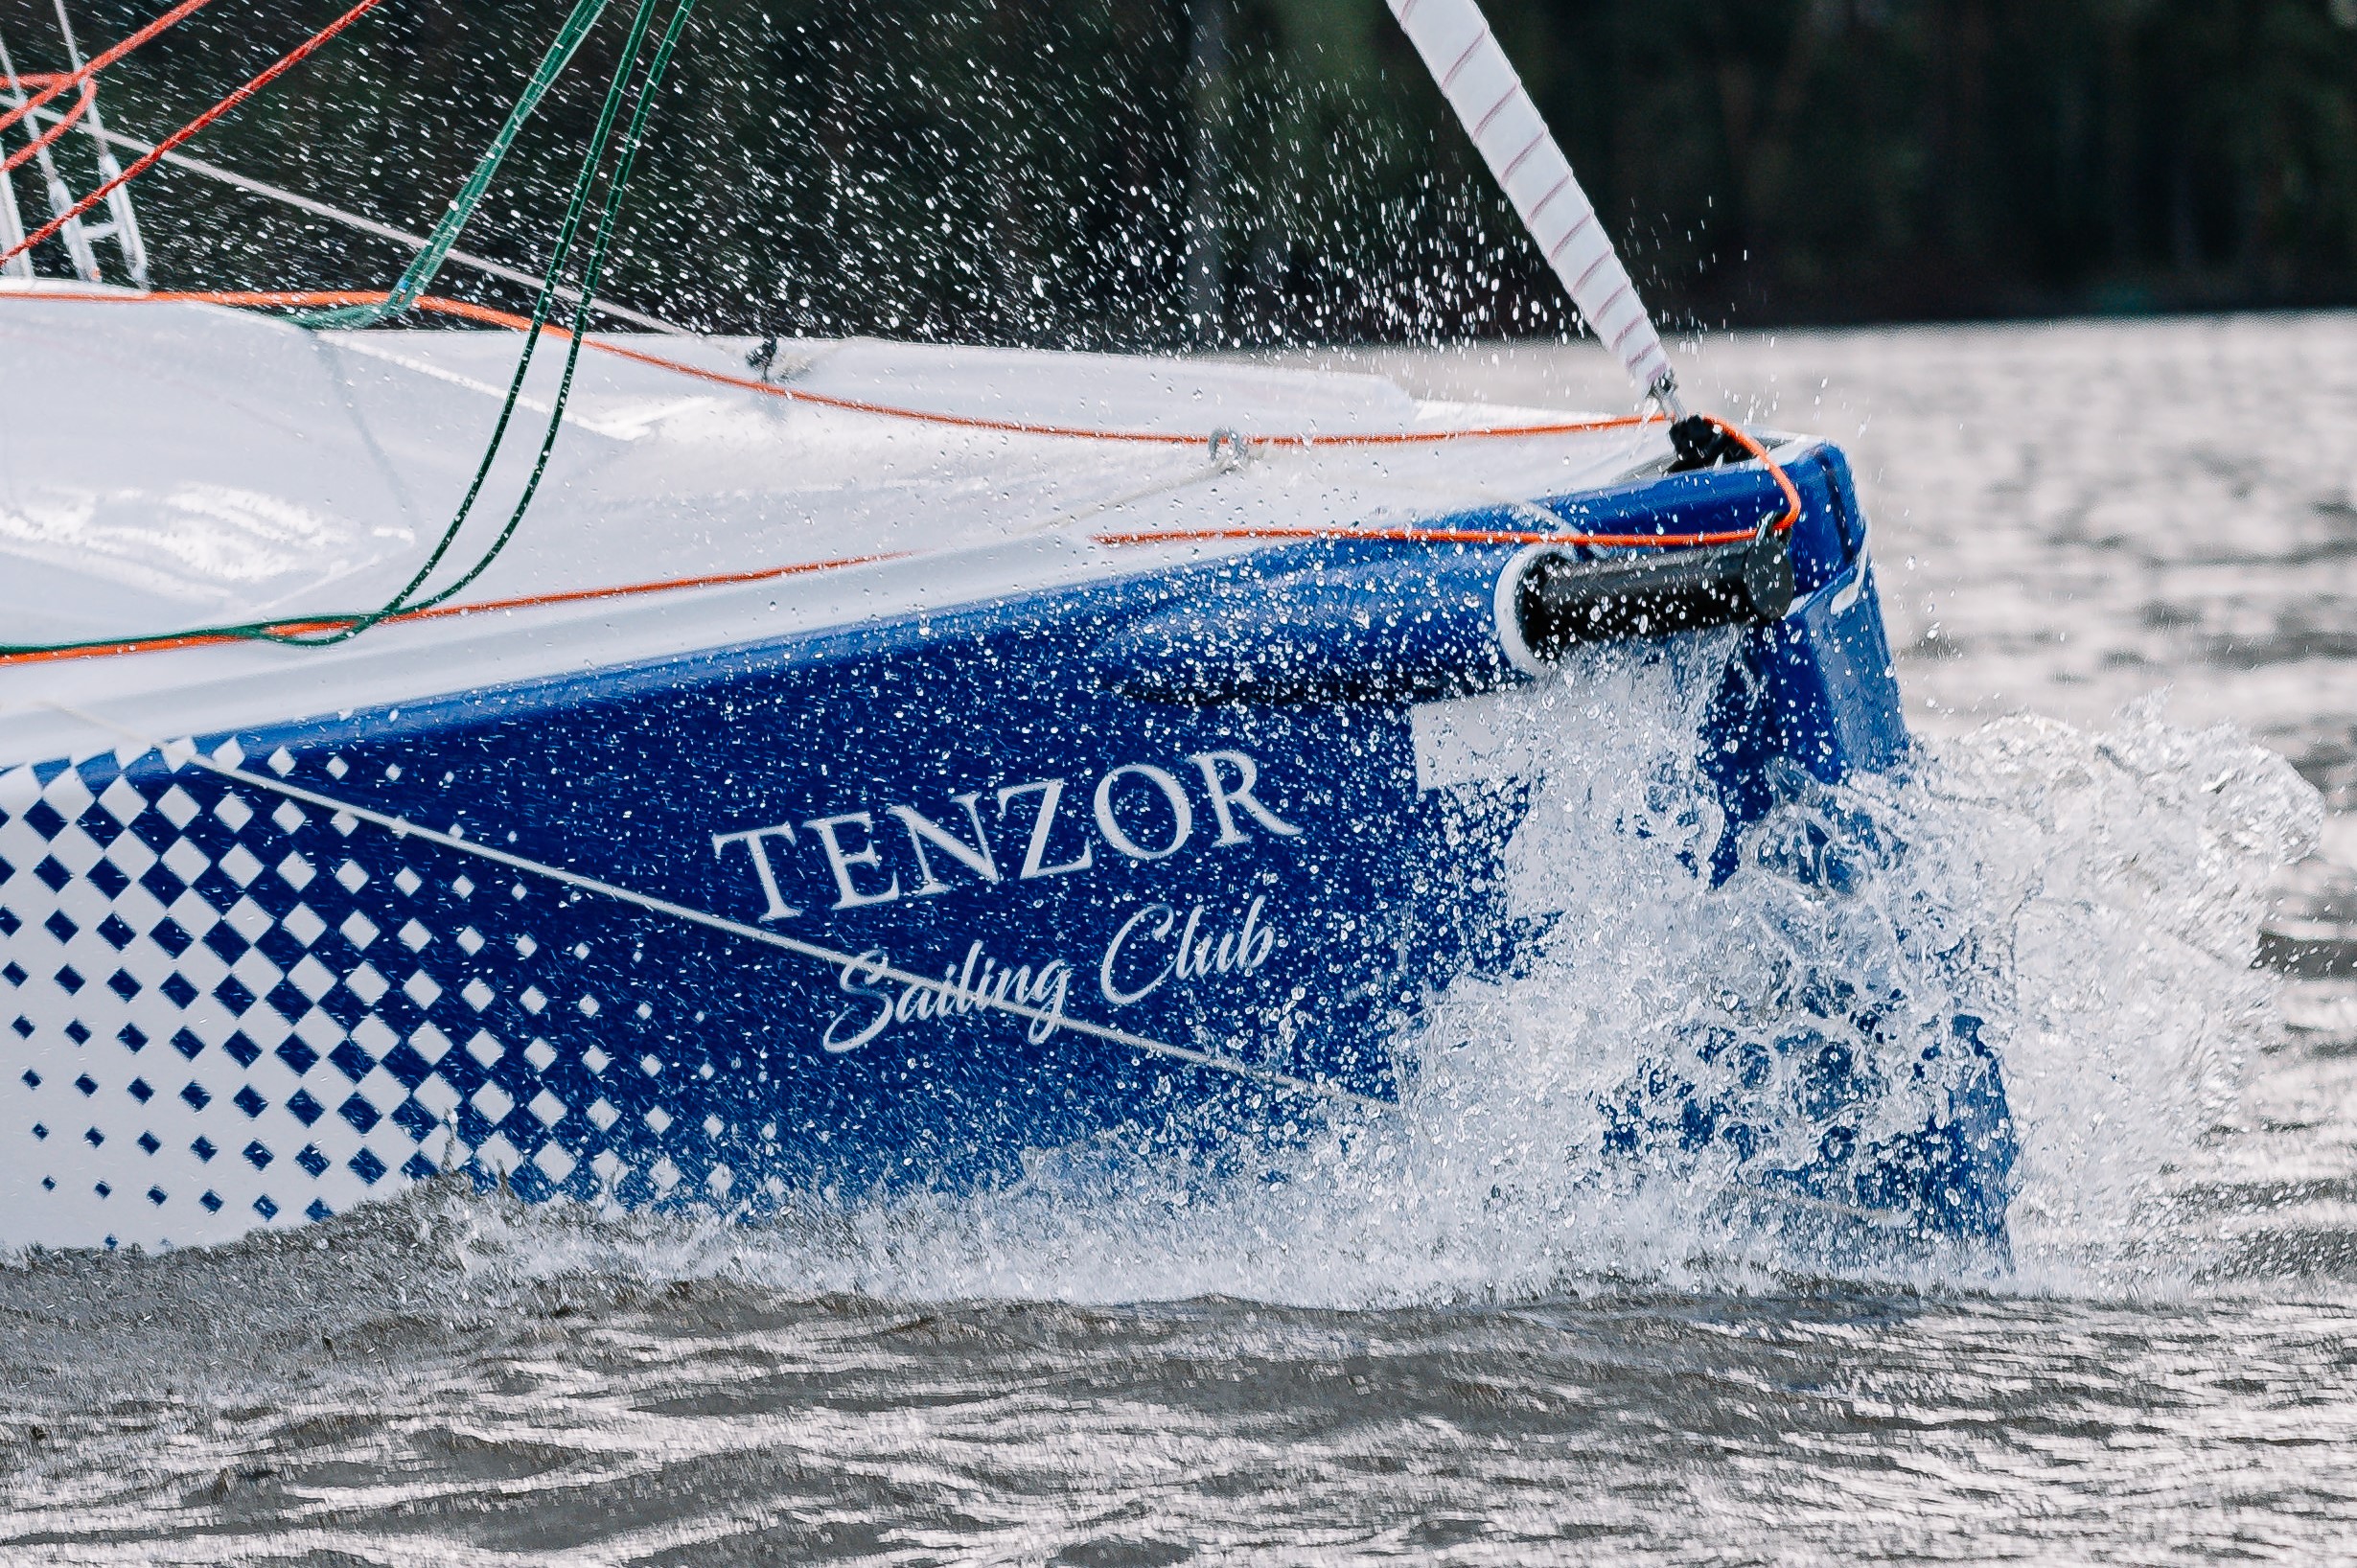 Tenzor Sailing Club celebrated its grand opening!